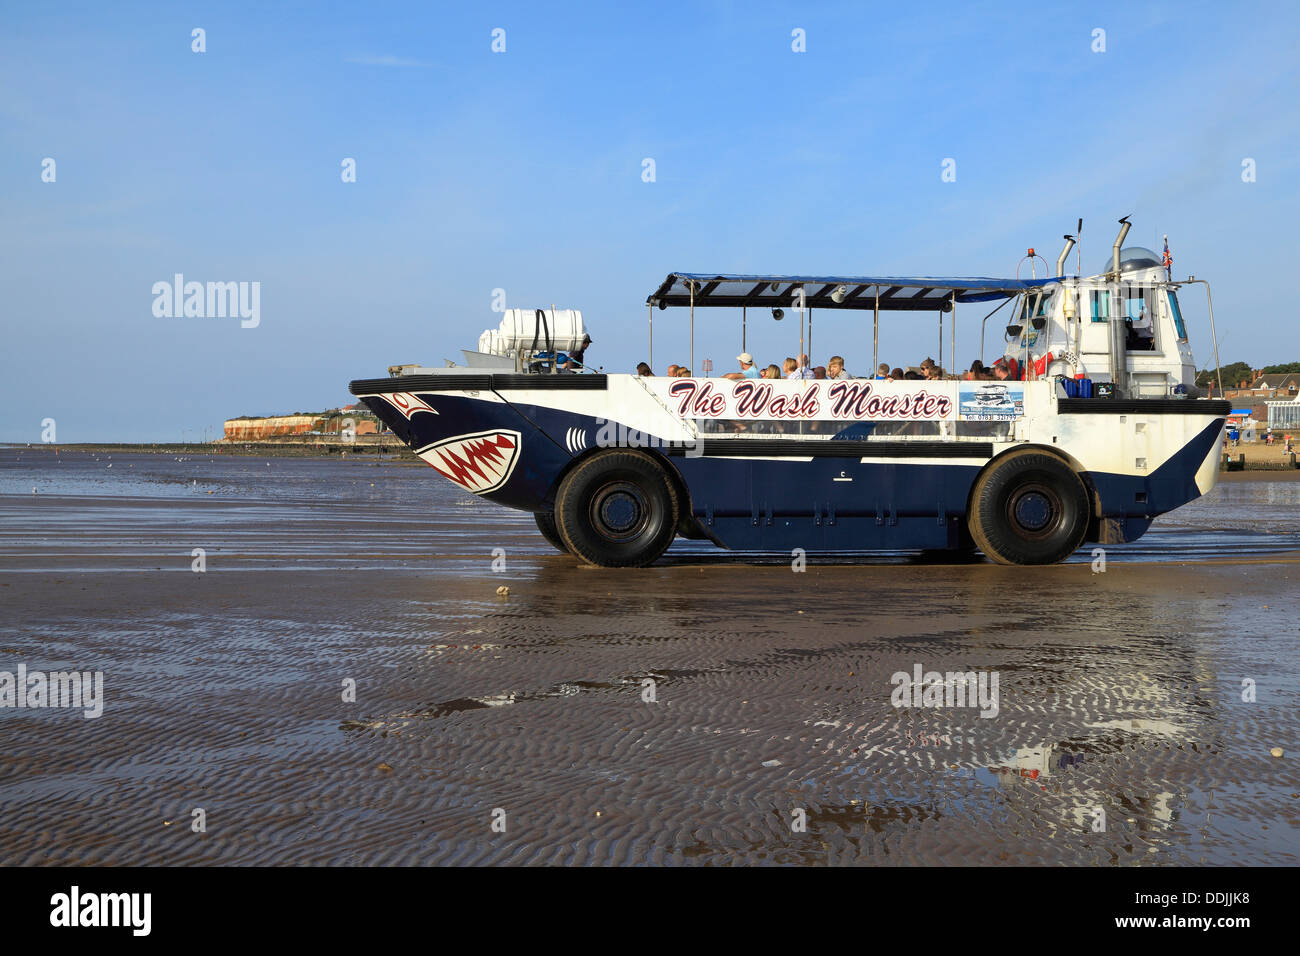 Le wash Monster, plage de Hunstanton, Norfolk, England UK embarcation amphibie excursions en mer voile Banque D'Images